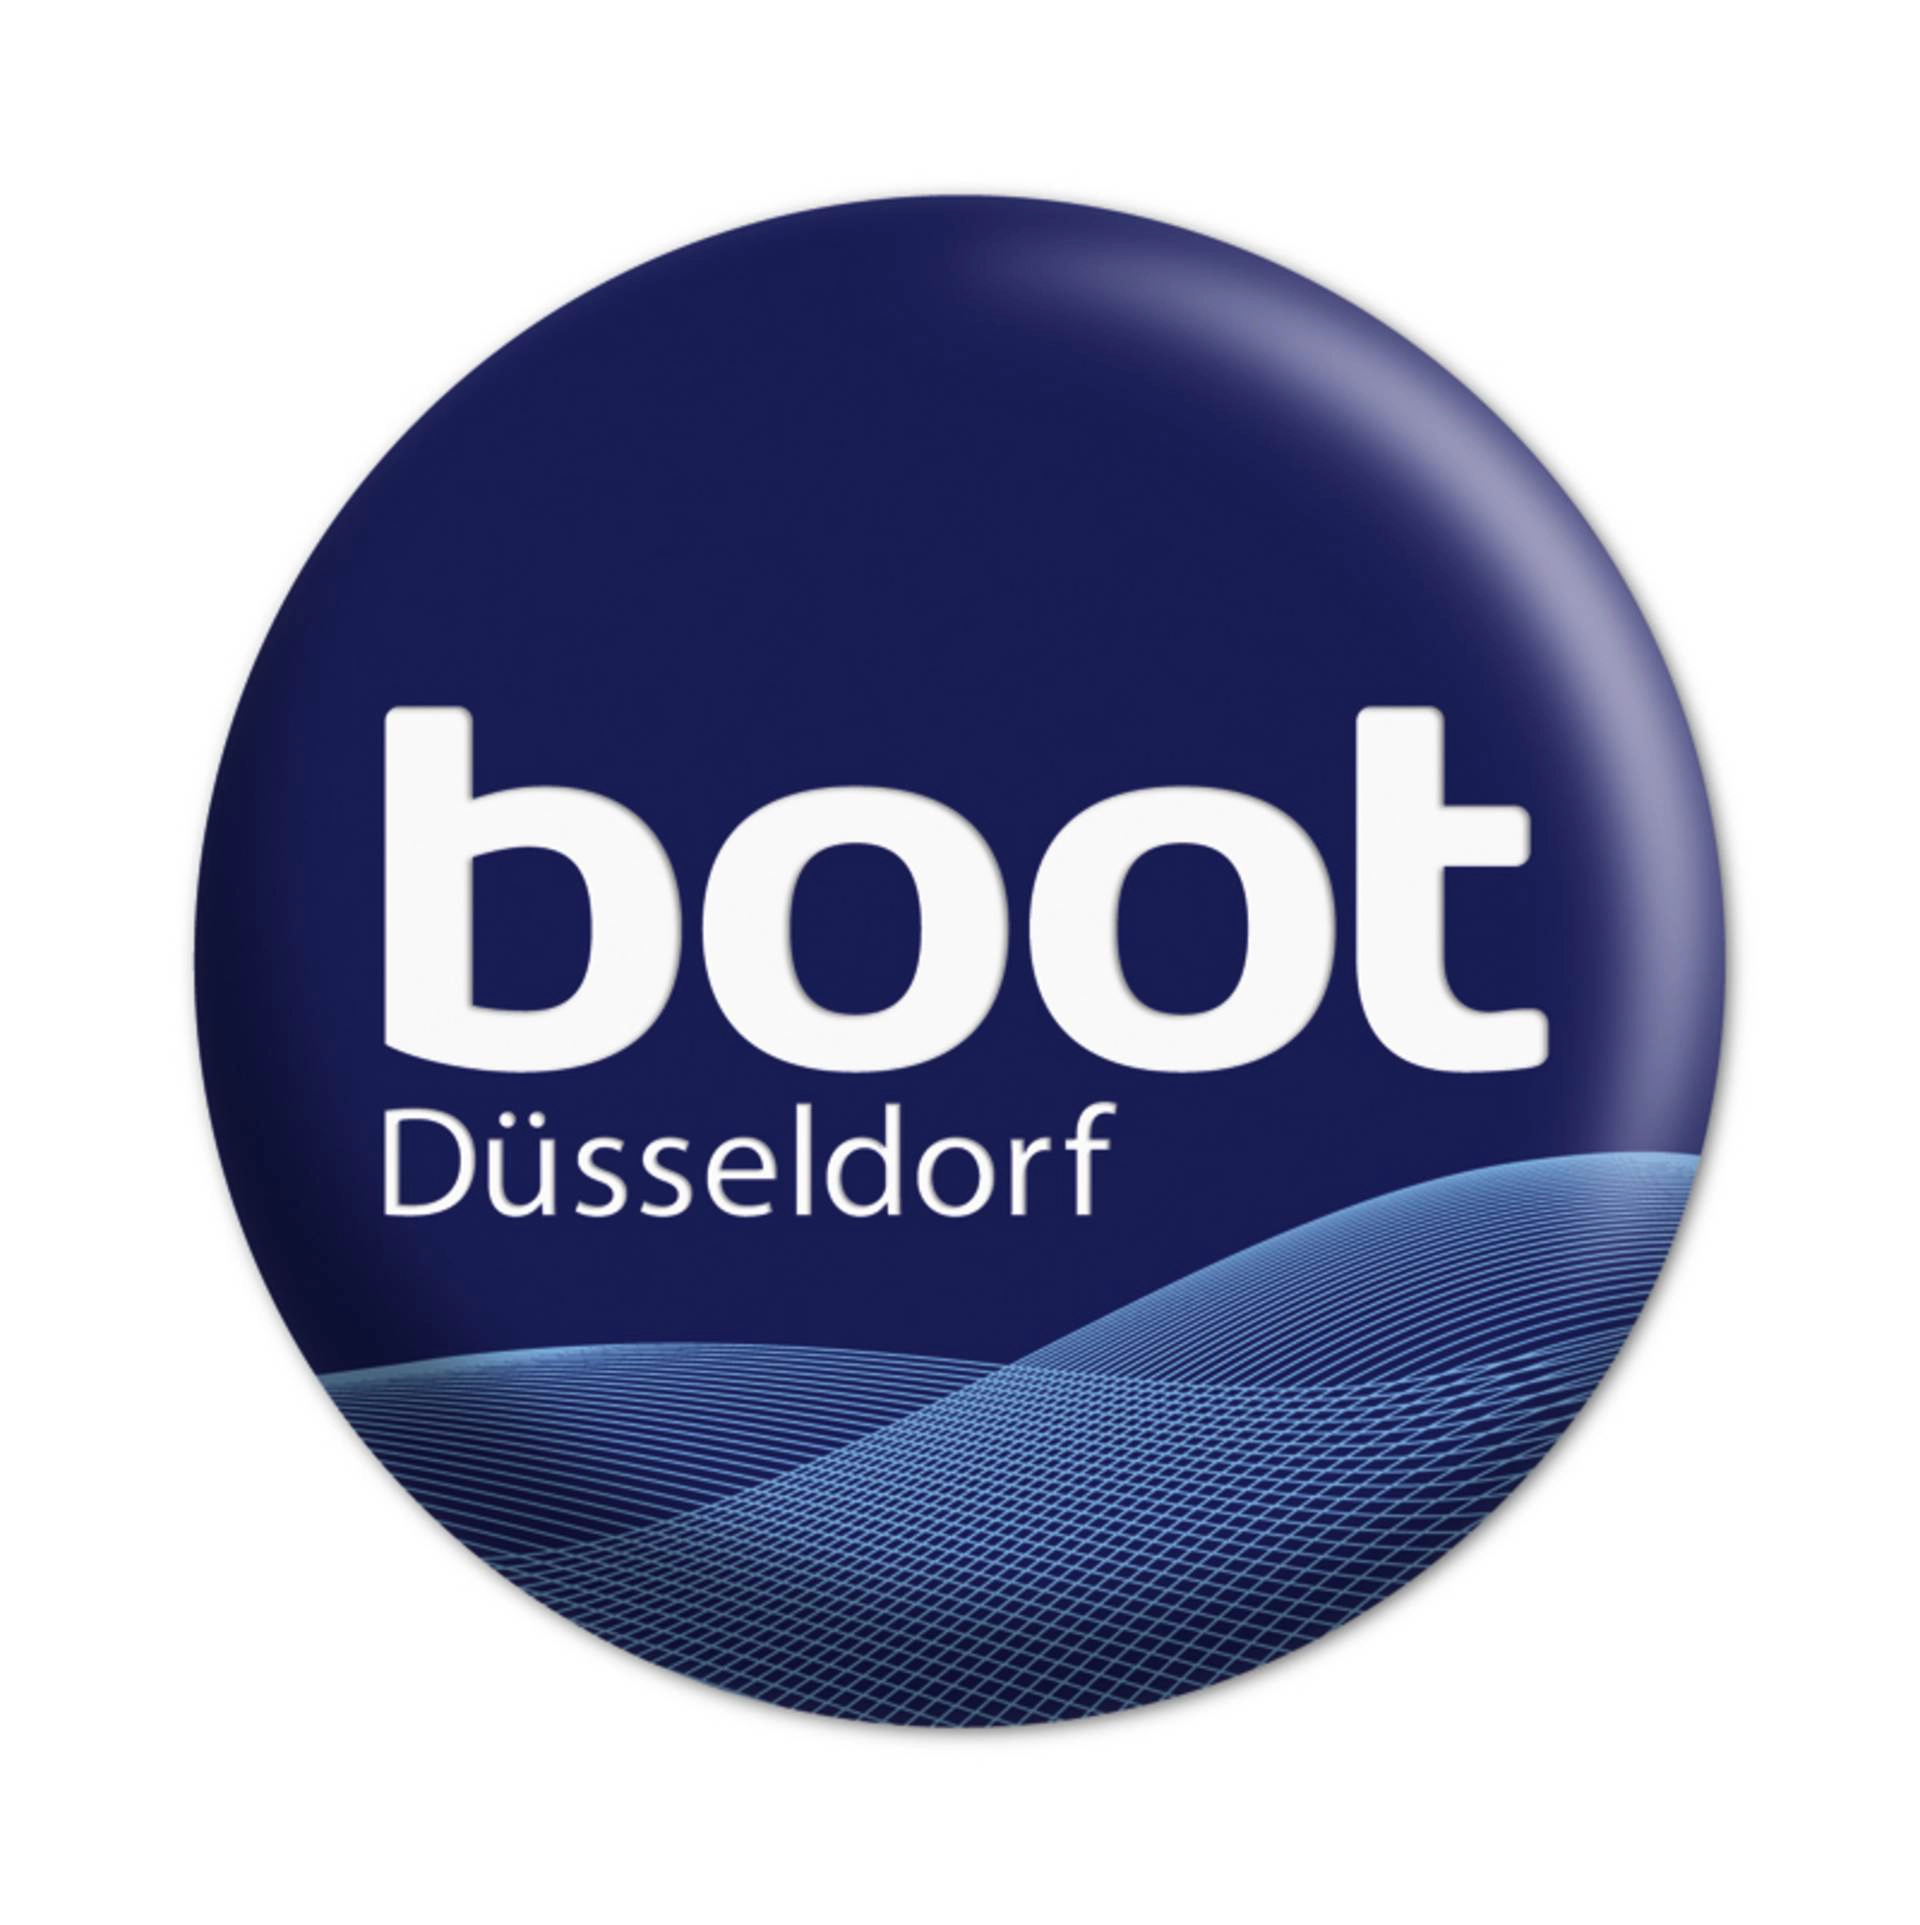 SVETOVNA PREMIJERA januarja 2022 na sejmu Boot Düsseldorf!